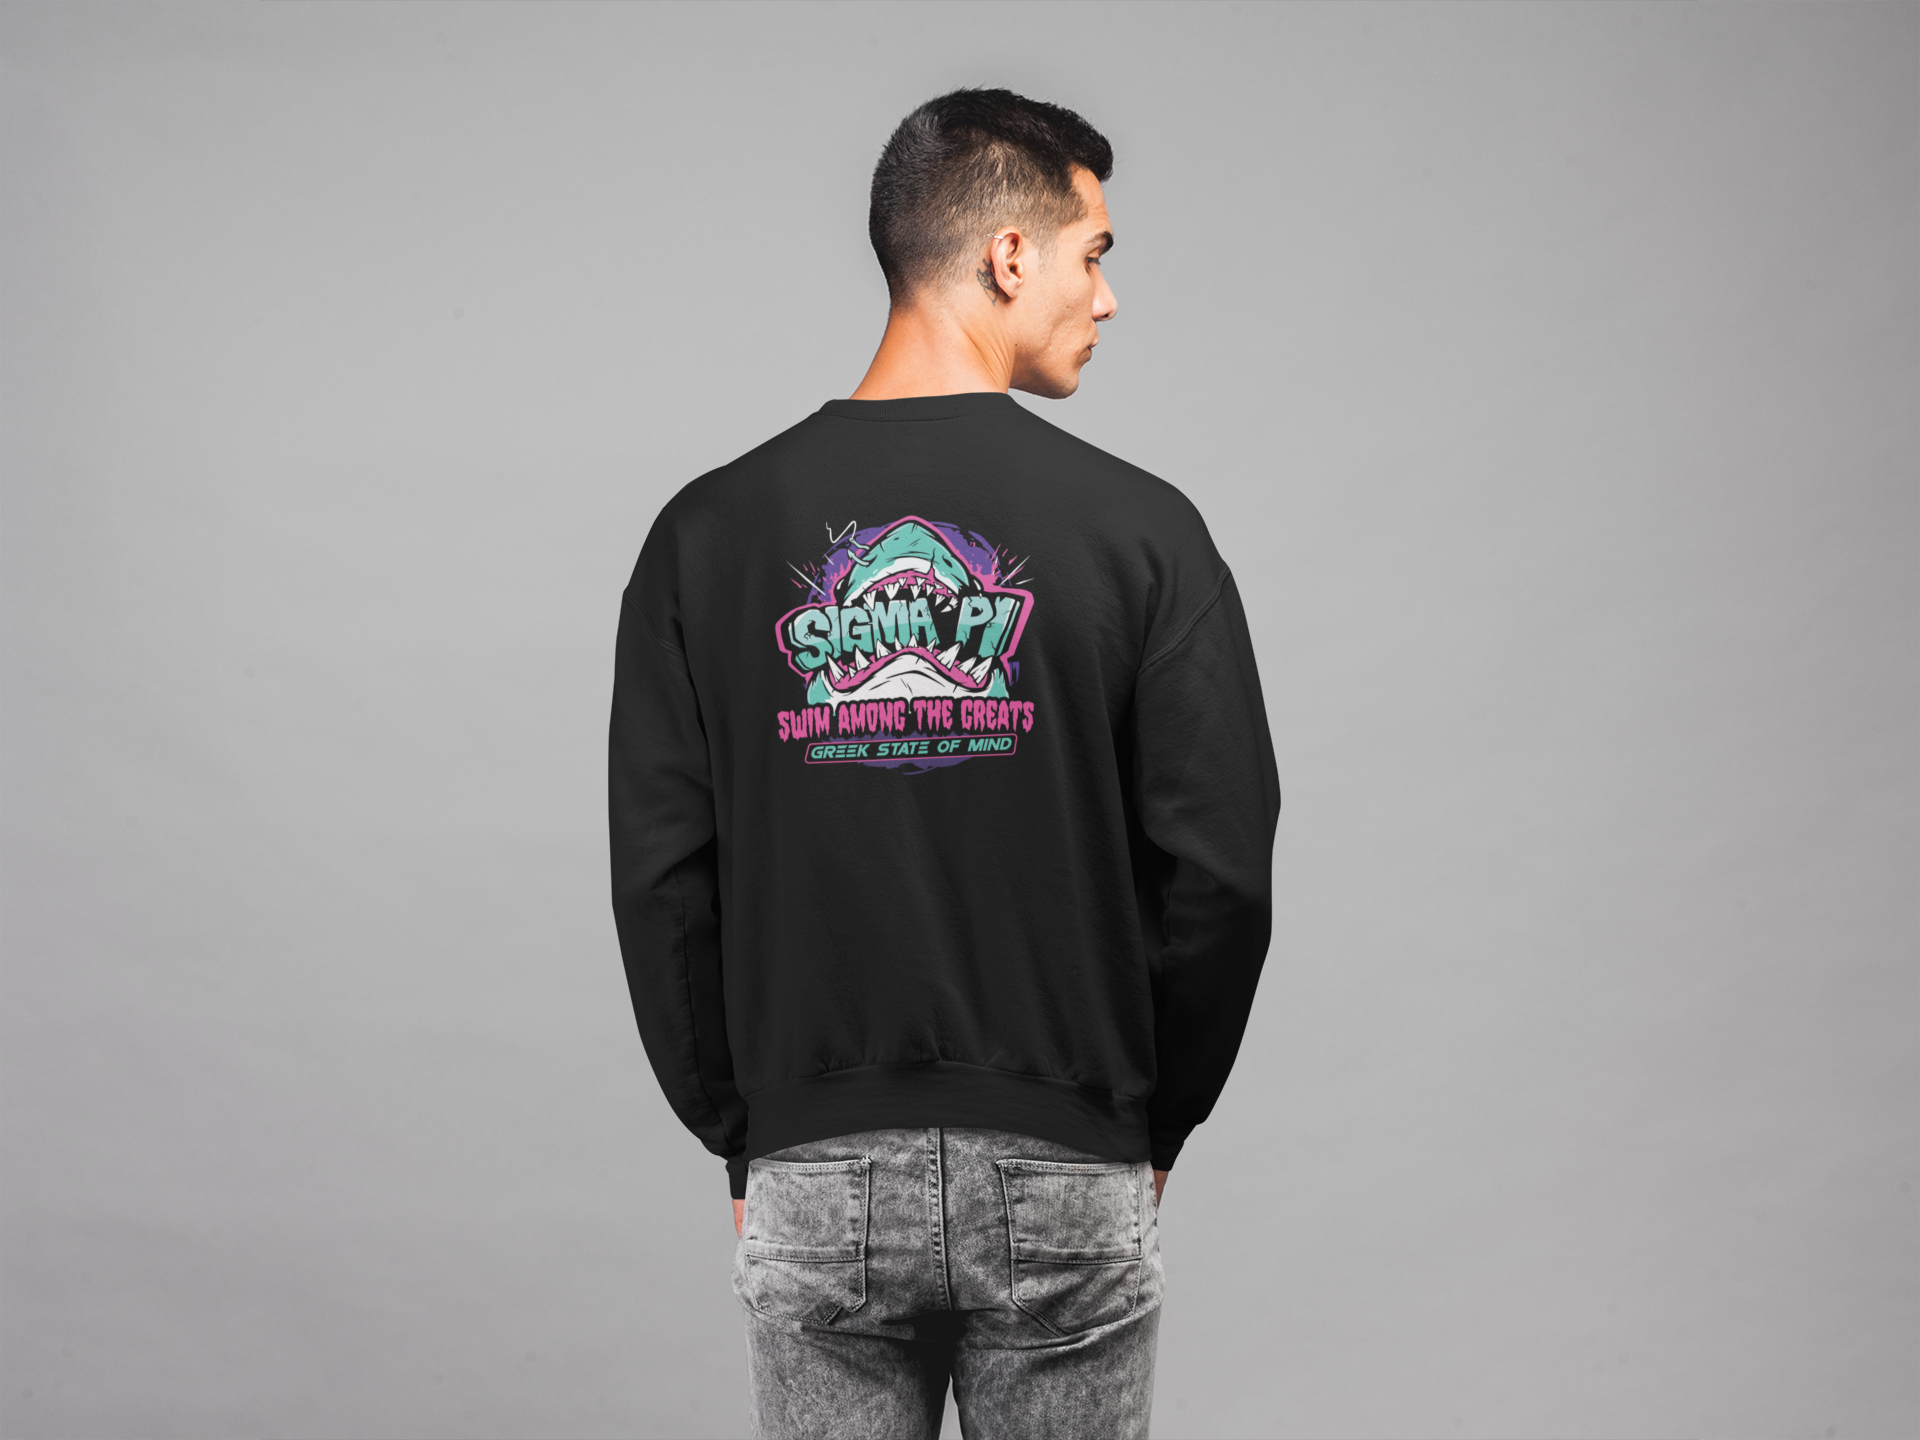 Sigma Pi Graphic Crewneck Sweatshirt | The Deep End | Sigma Pi Apparel and Merchandise model 